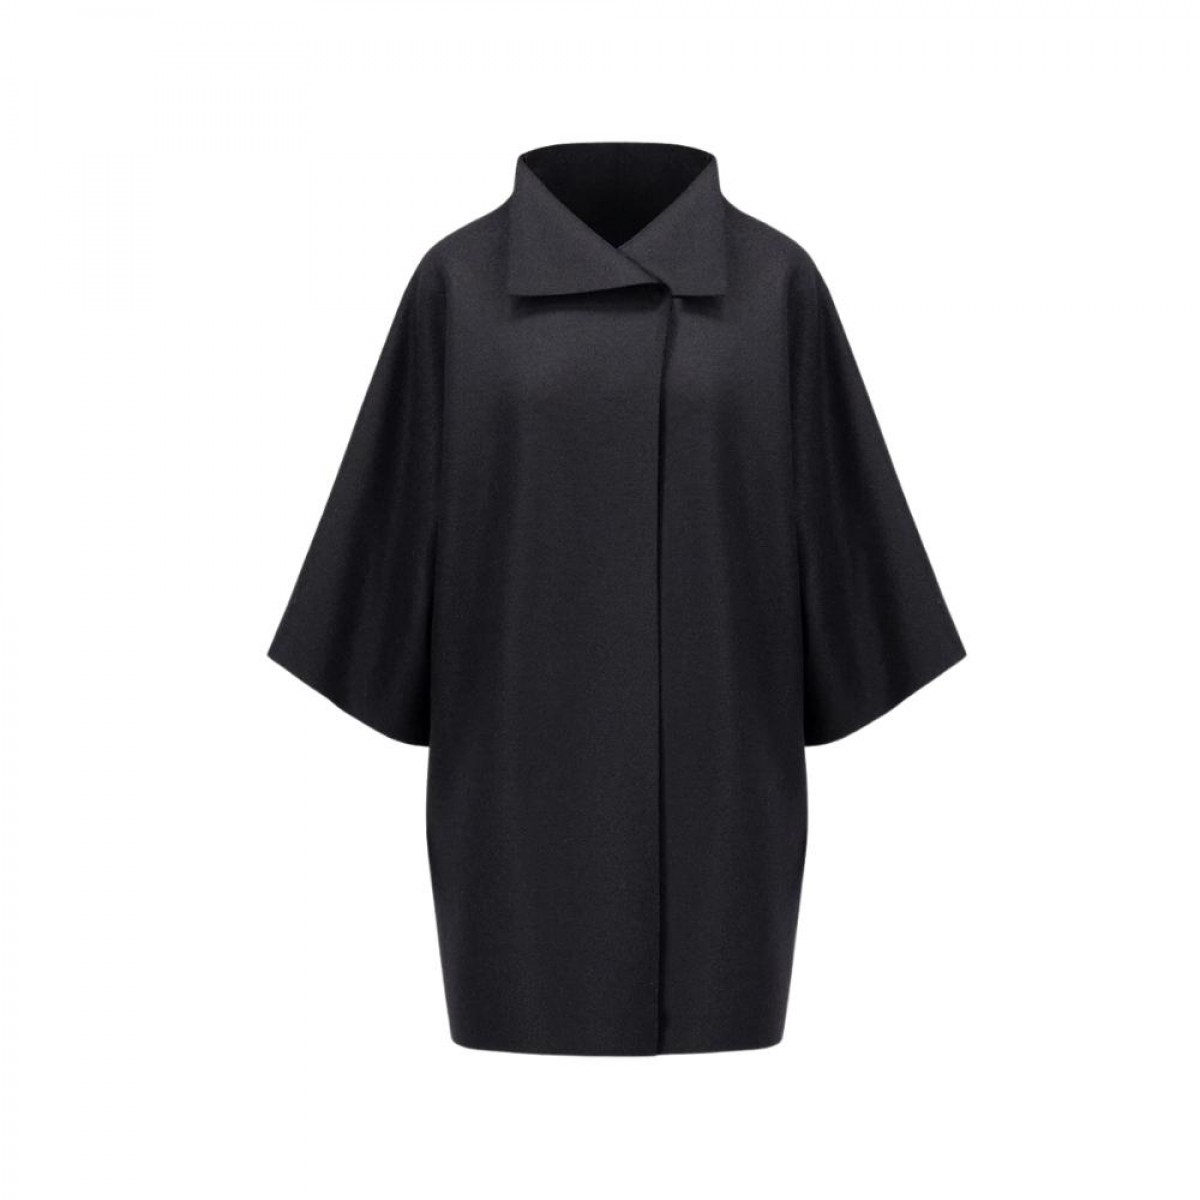 kimono mantle pressed wool - black - front